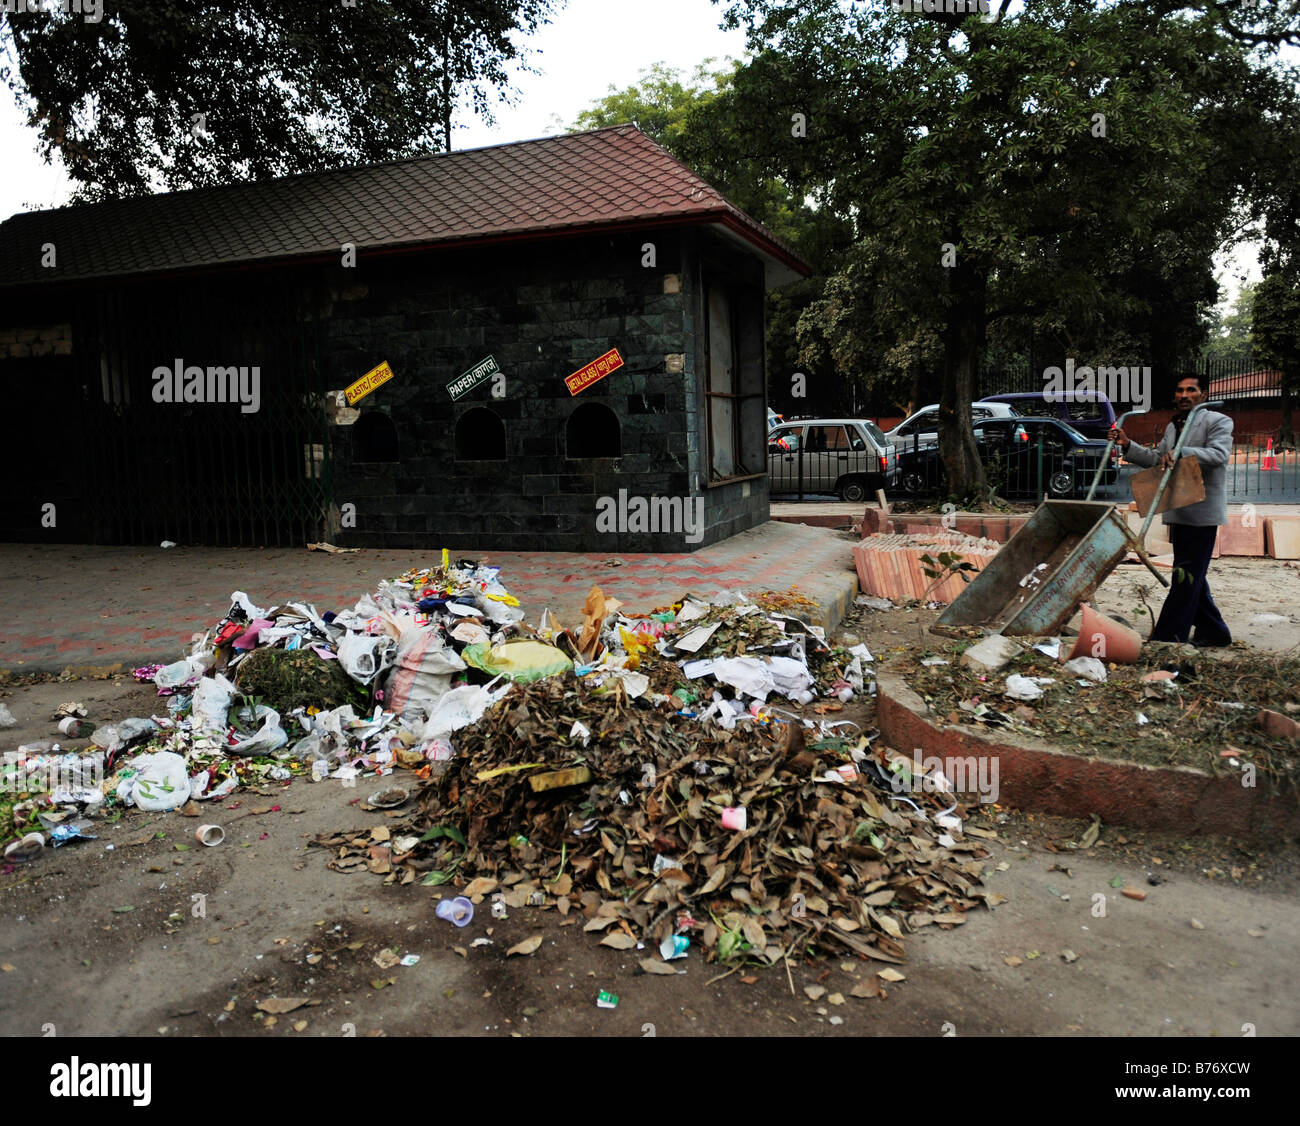 a man dumps rubbish outside a recycling bank Bhagwan Dass Rd New Delhi Stock Photo